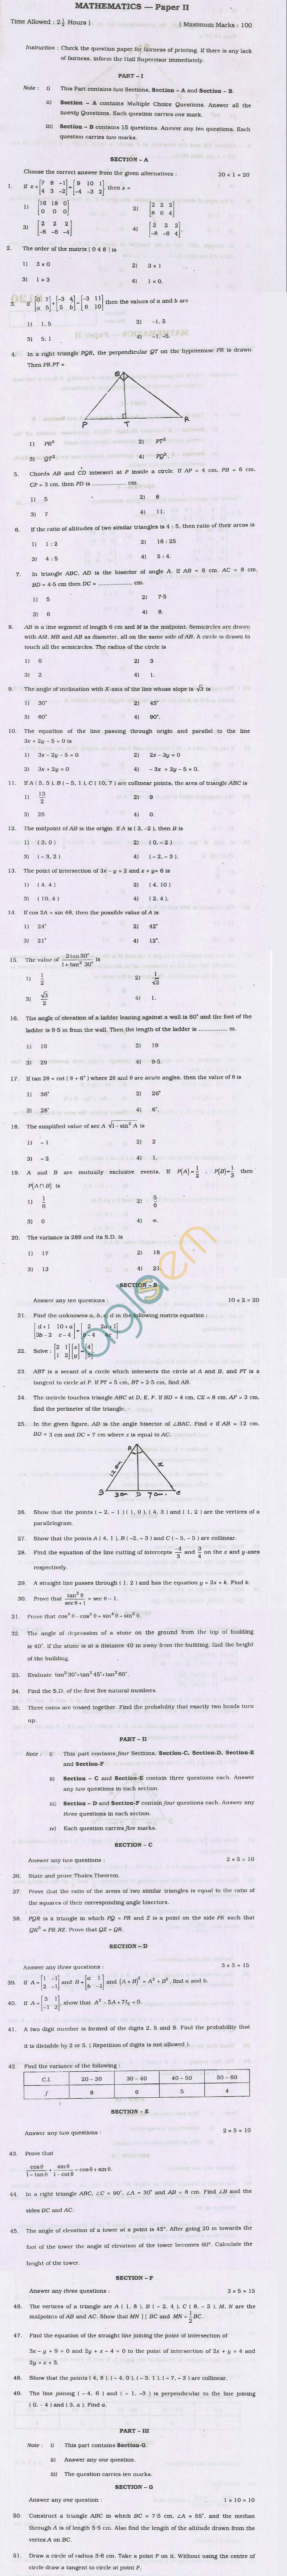 TN Board Matriculation Mathematics Question Papers June 2011